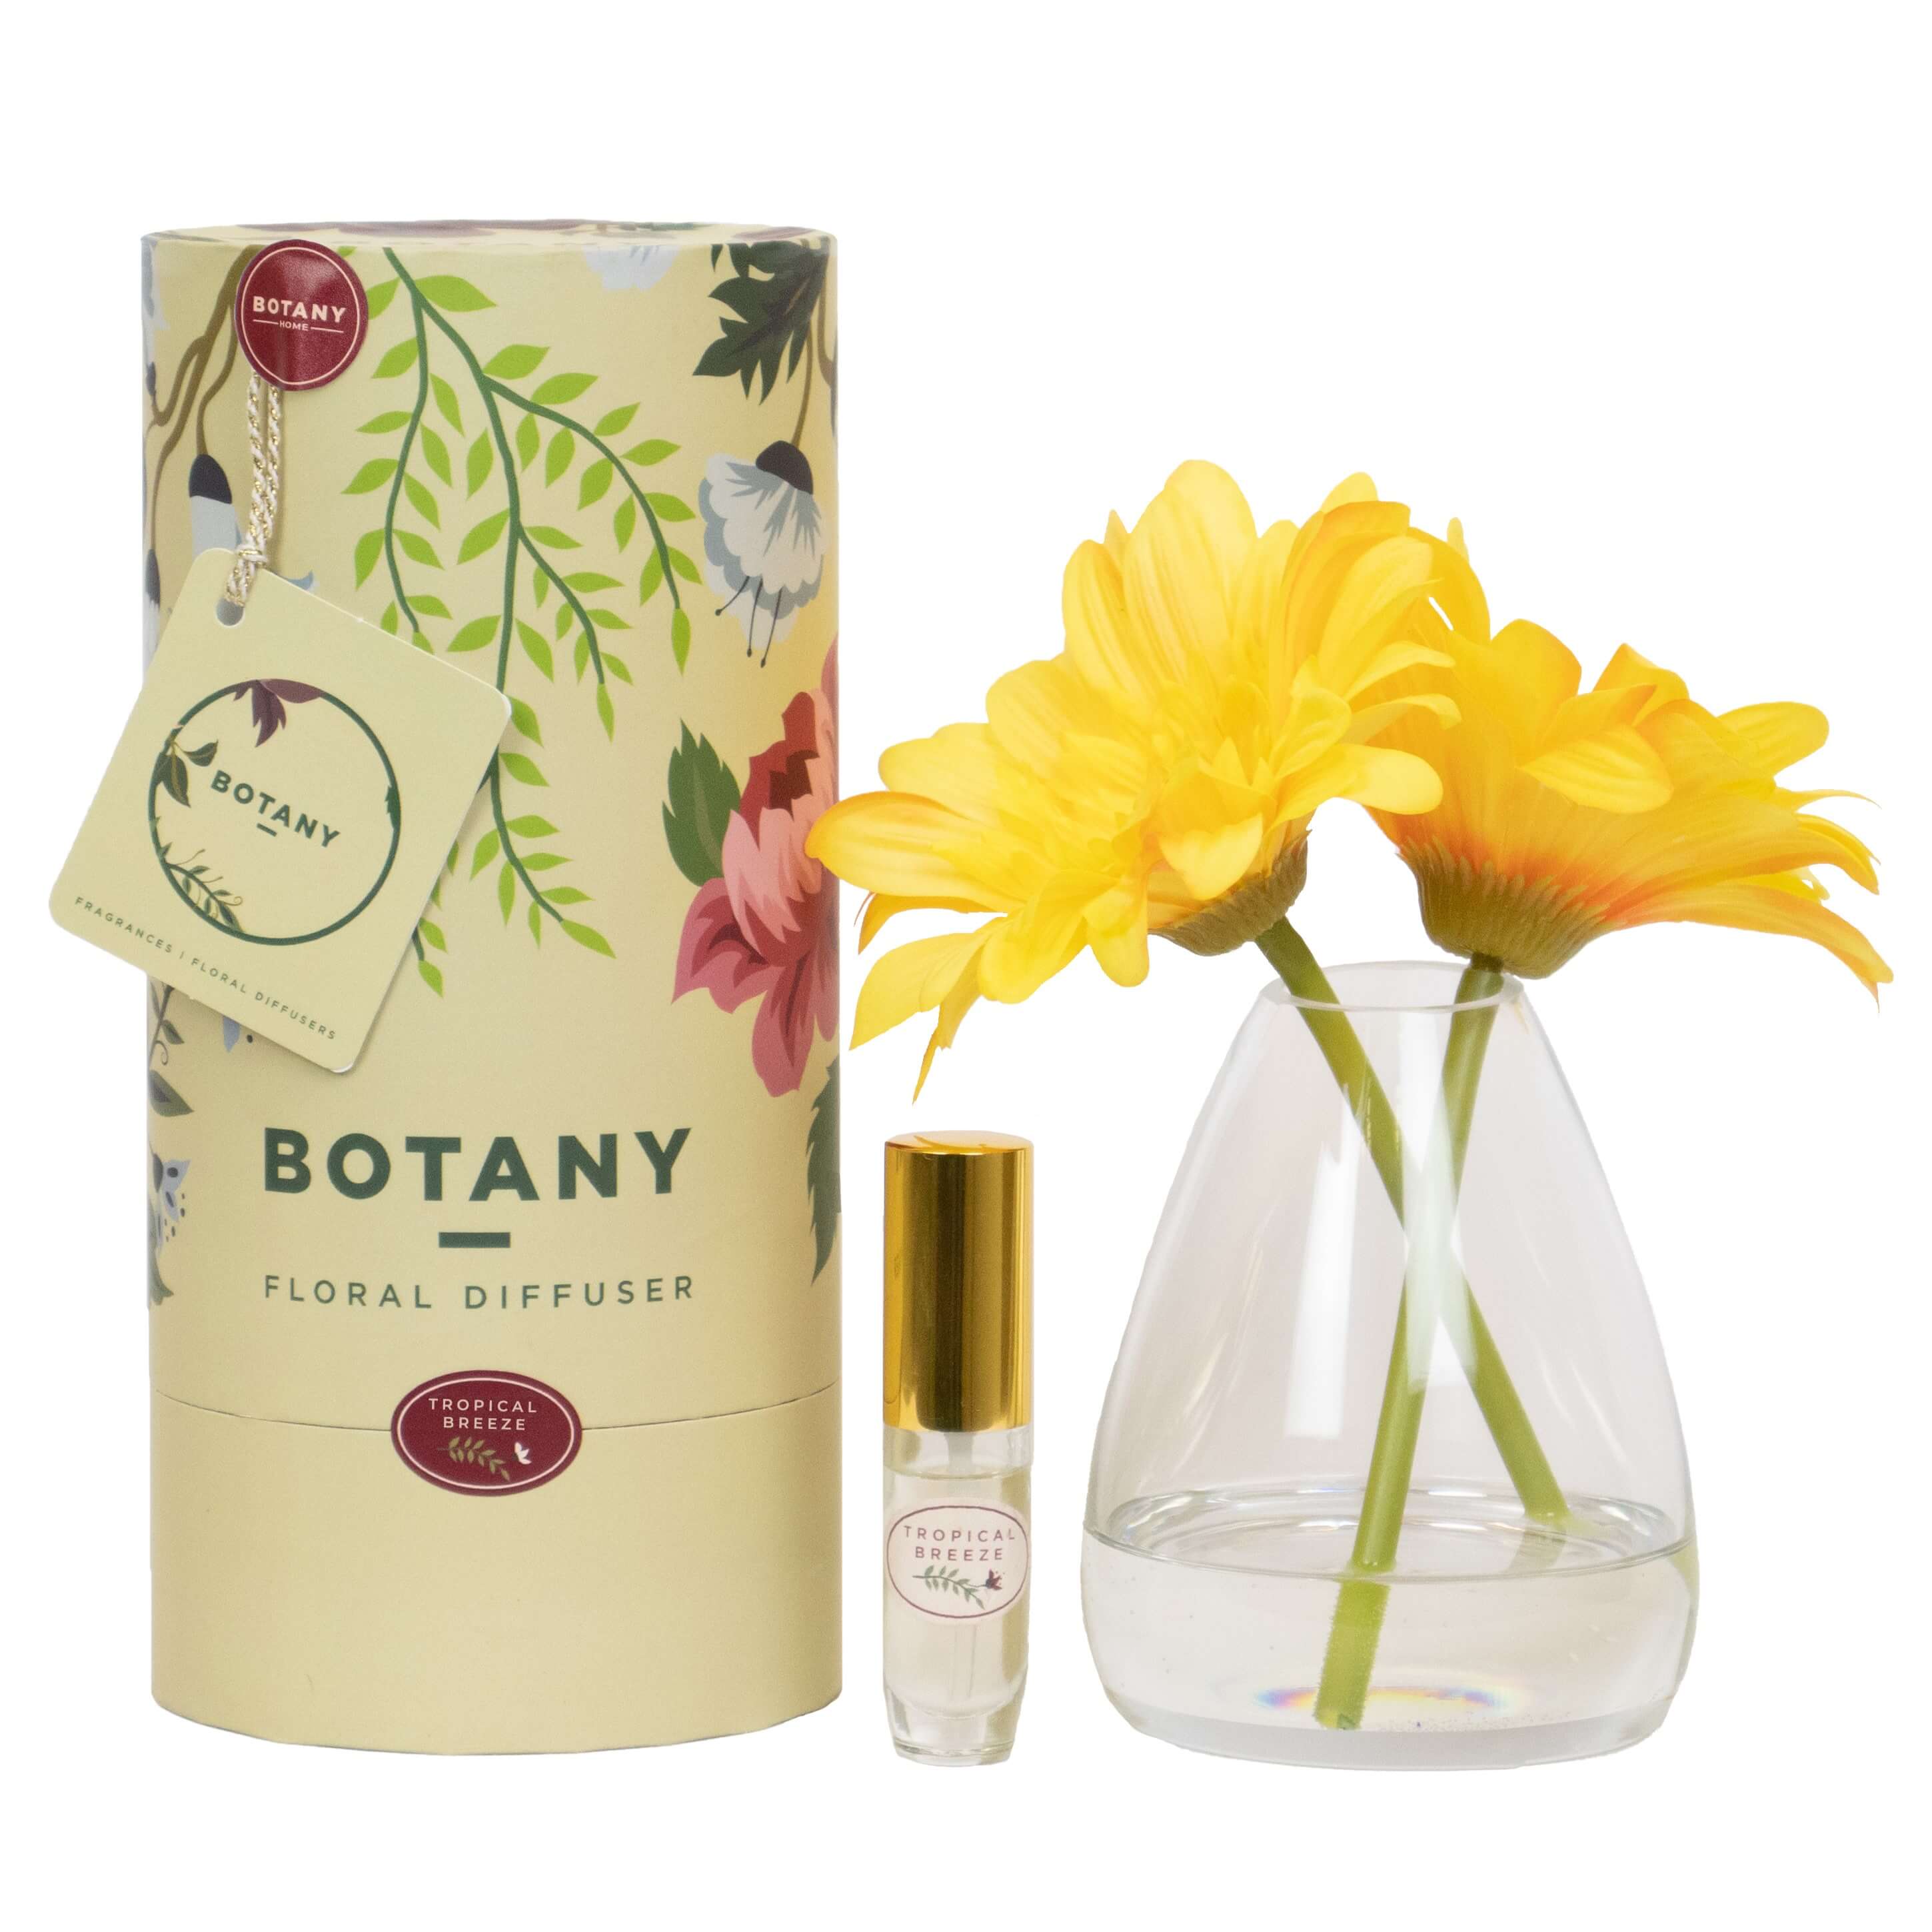 Artificial yellow daisy flower arrangement with perfume spray